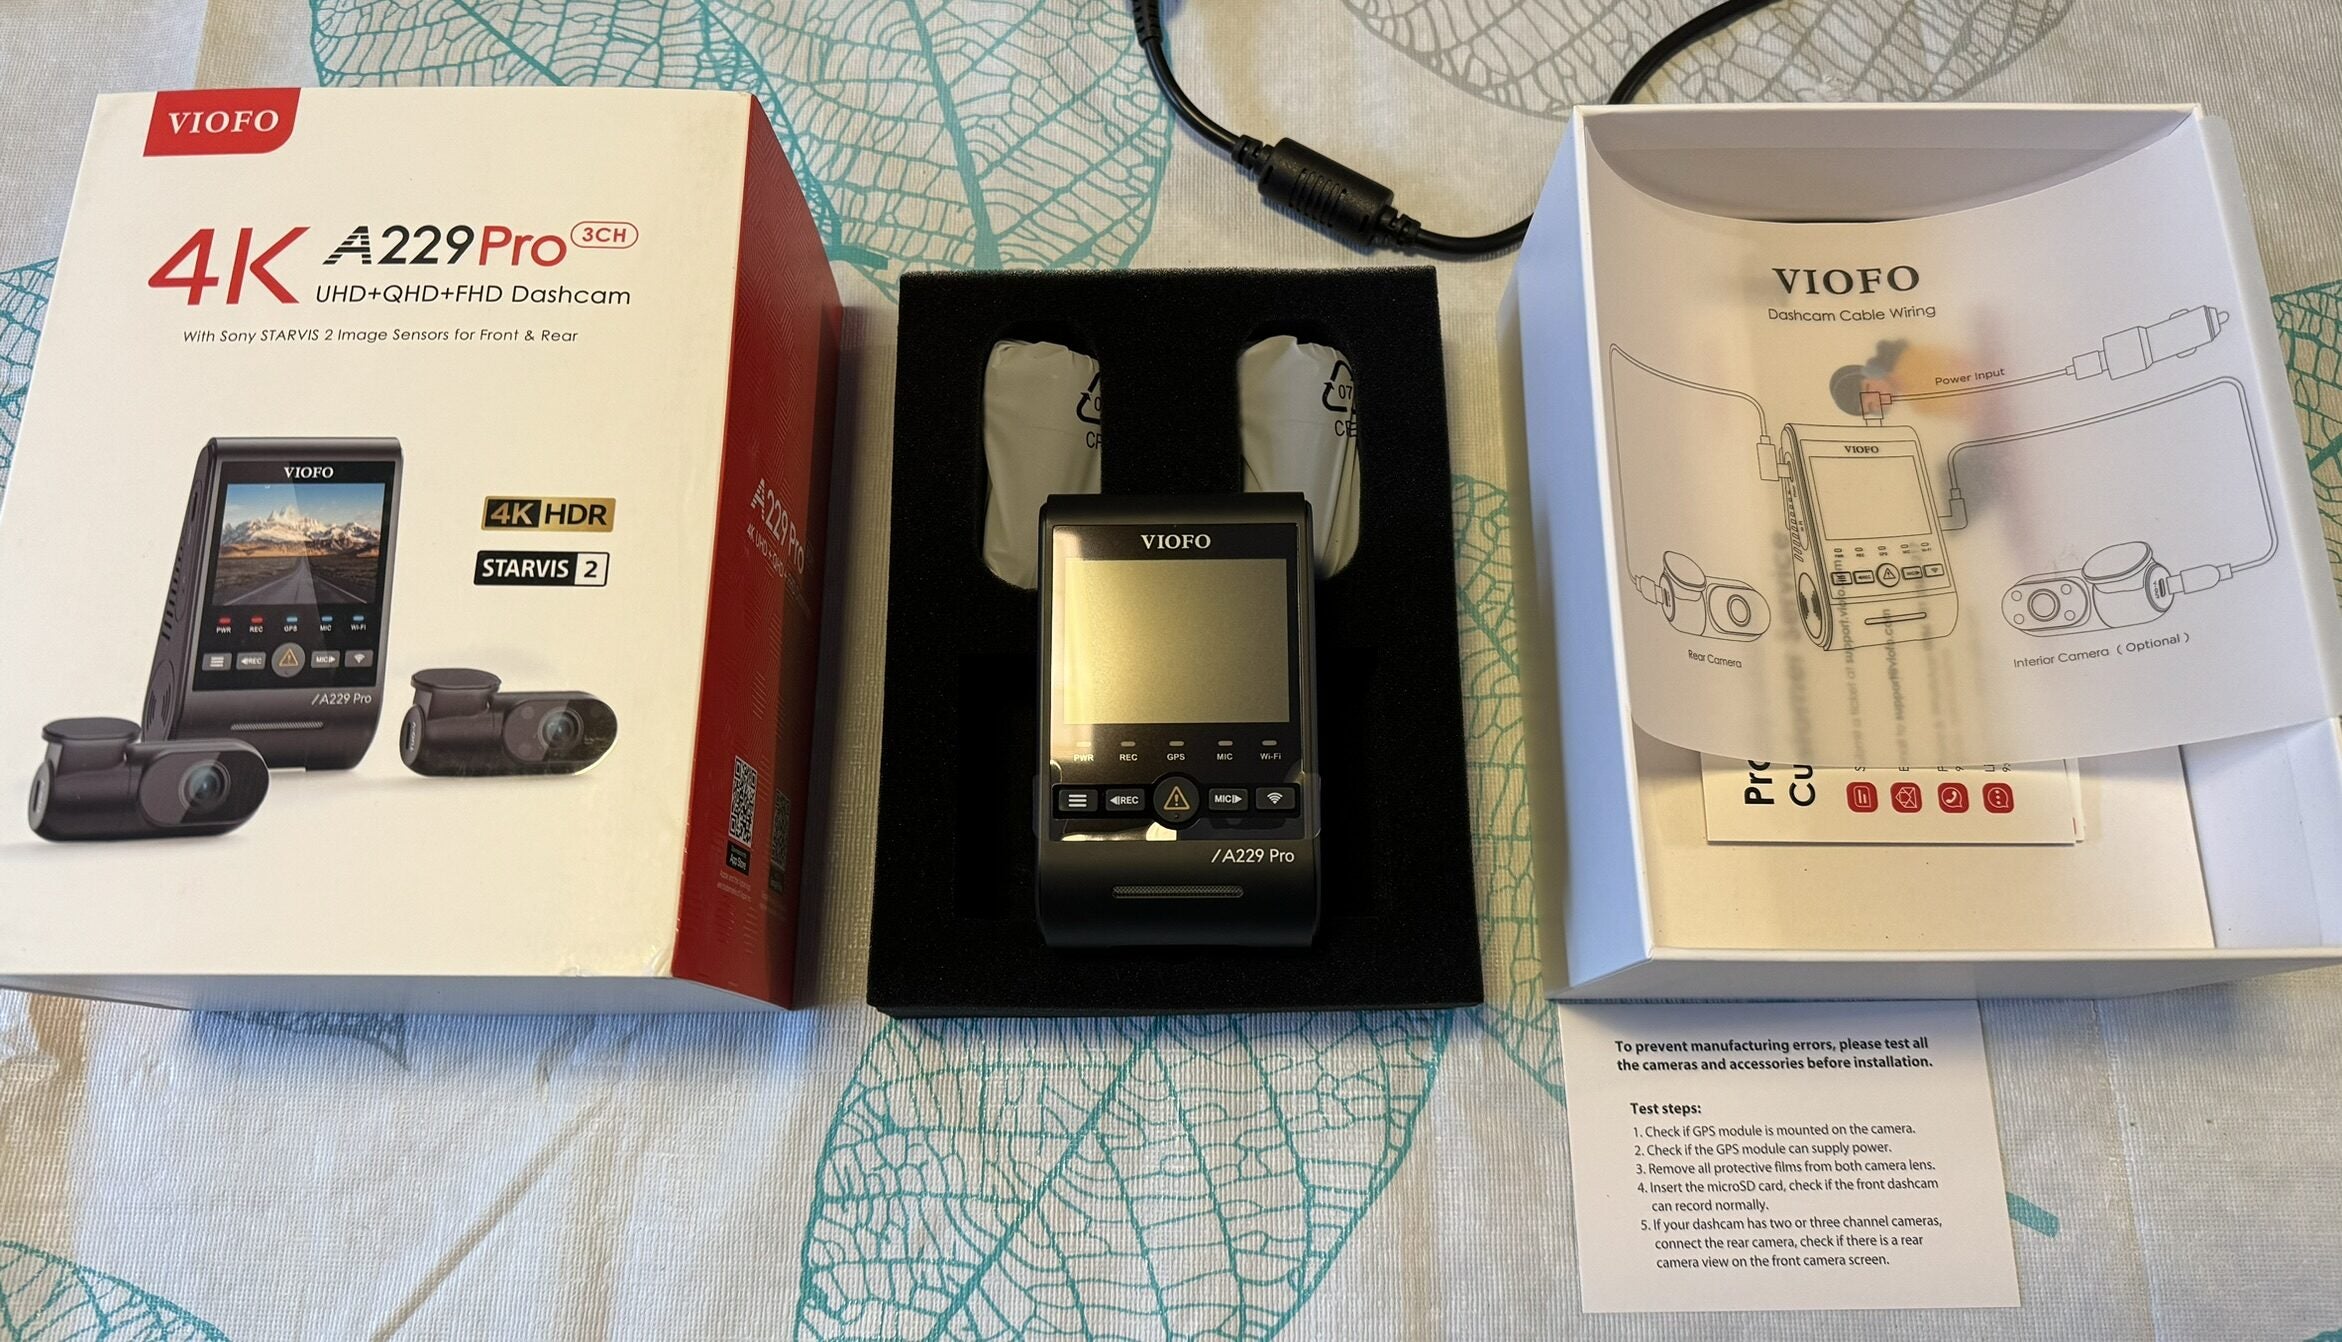 VIOFO A229 Pro, 3 Channel DashCam, Sony Starvis 2 sensor. Brand new. Will  ship. for sale - RedFlagDeals.com Forums